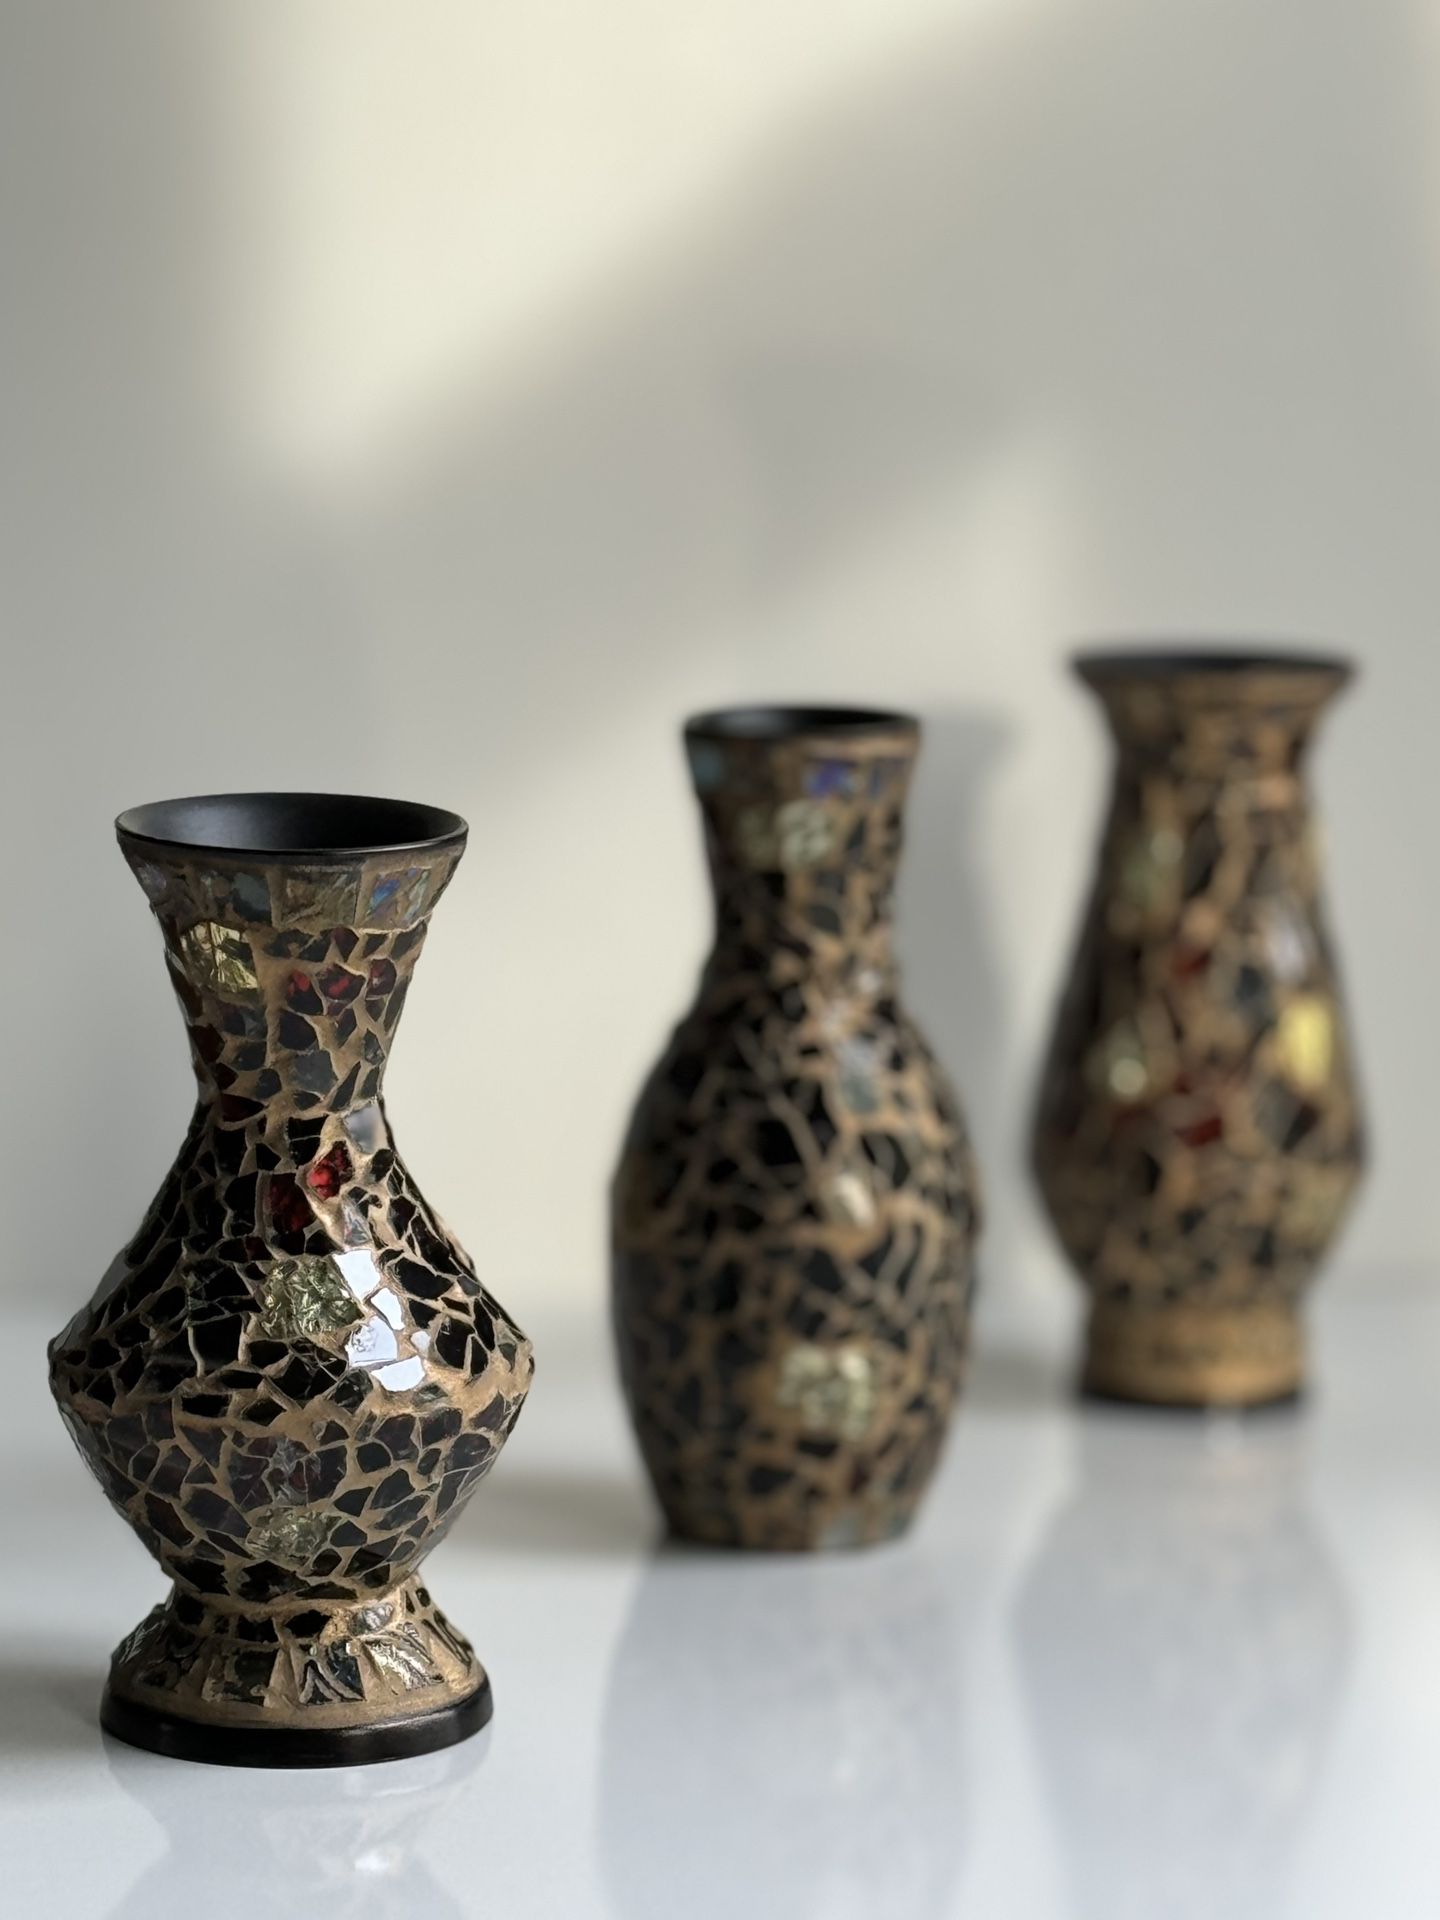 Vintage Pier 1 Imports Glass Mosaic Bud Vases Trio!